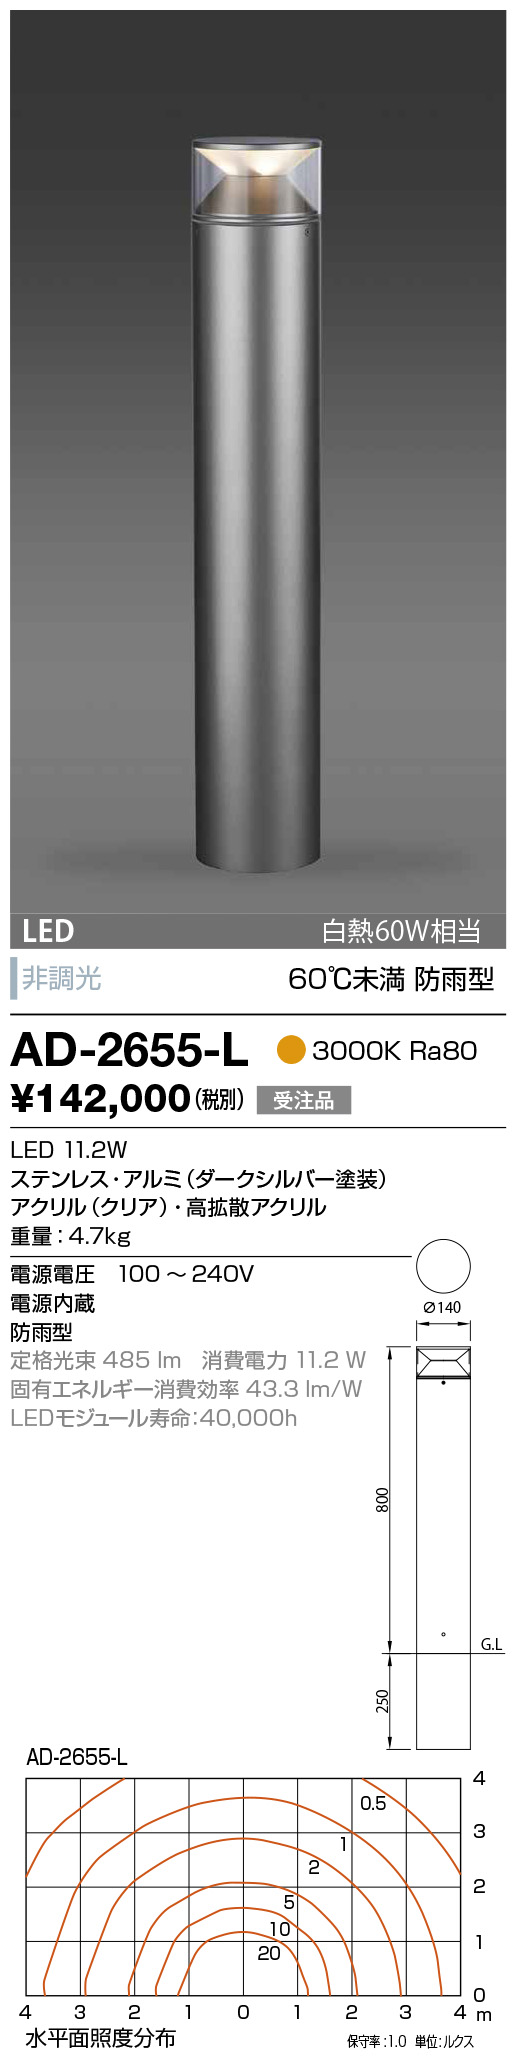 AD-2655-L(山田照明) 商品詳細 ～ 照明器具・換気扇他、電設資材販売のブライト